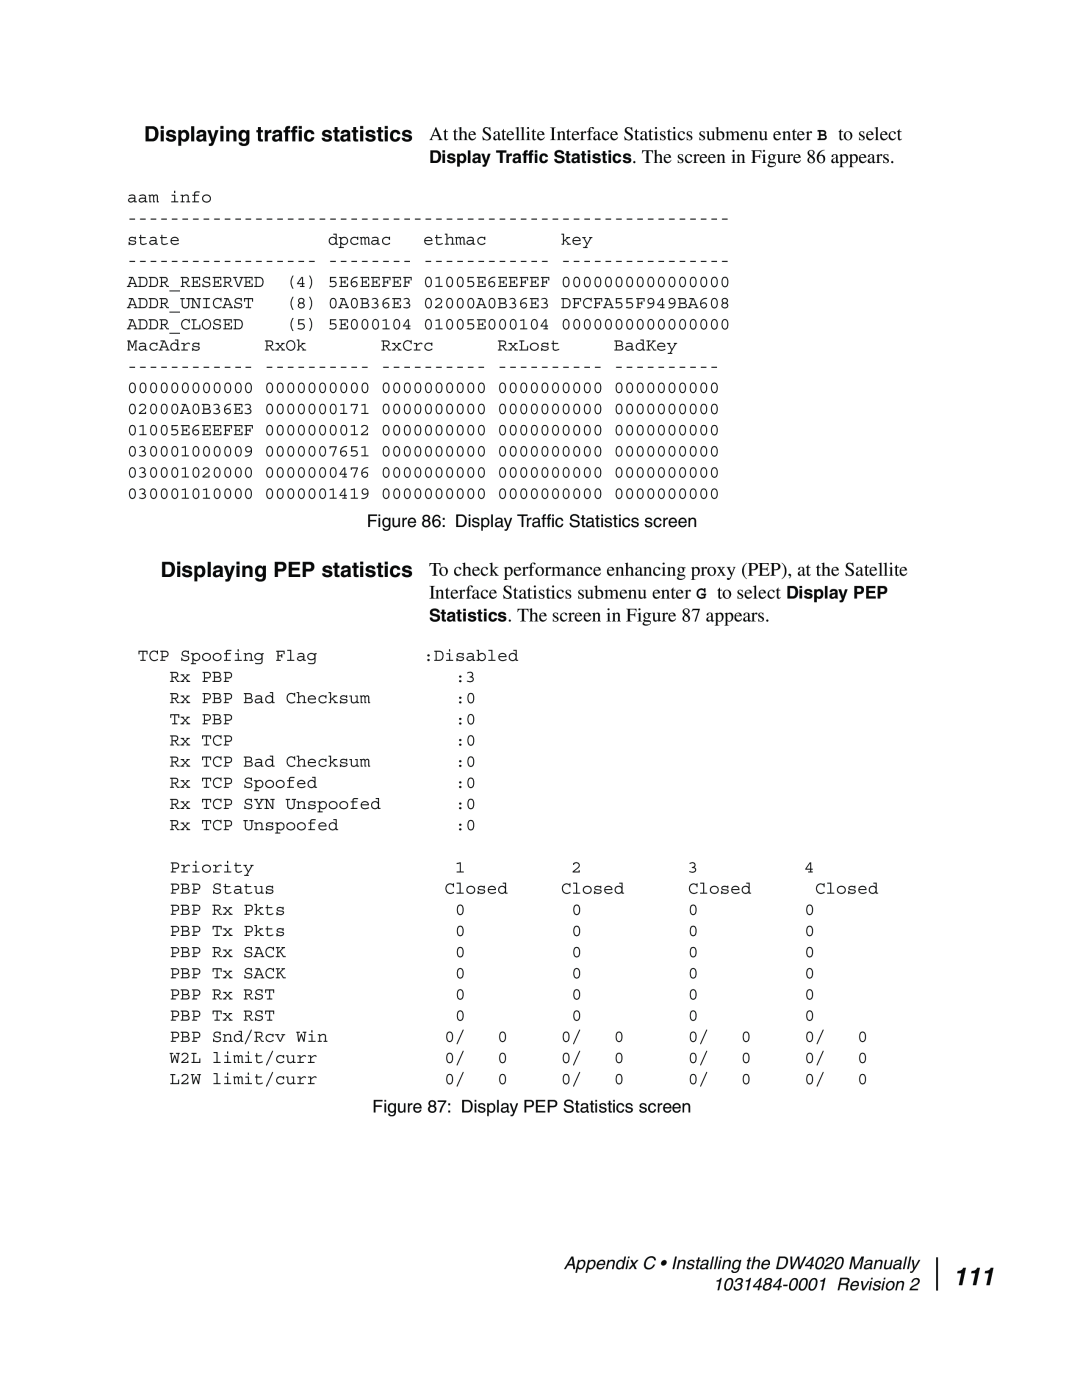 Hughes DW4020 manual Display Traffic Statistics screen, Display PEP Statistics screen 